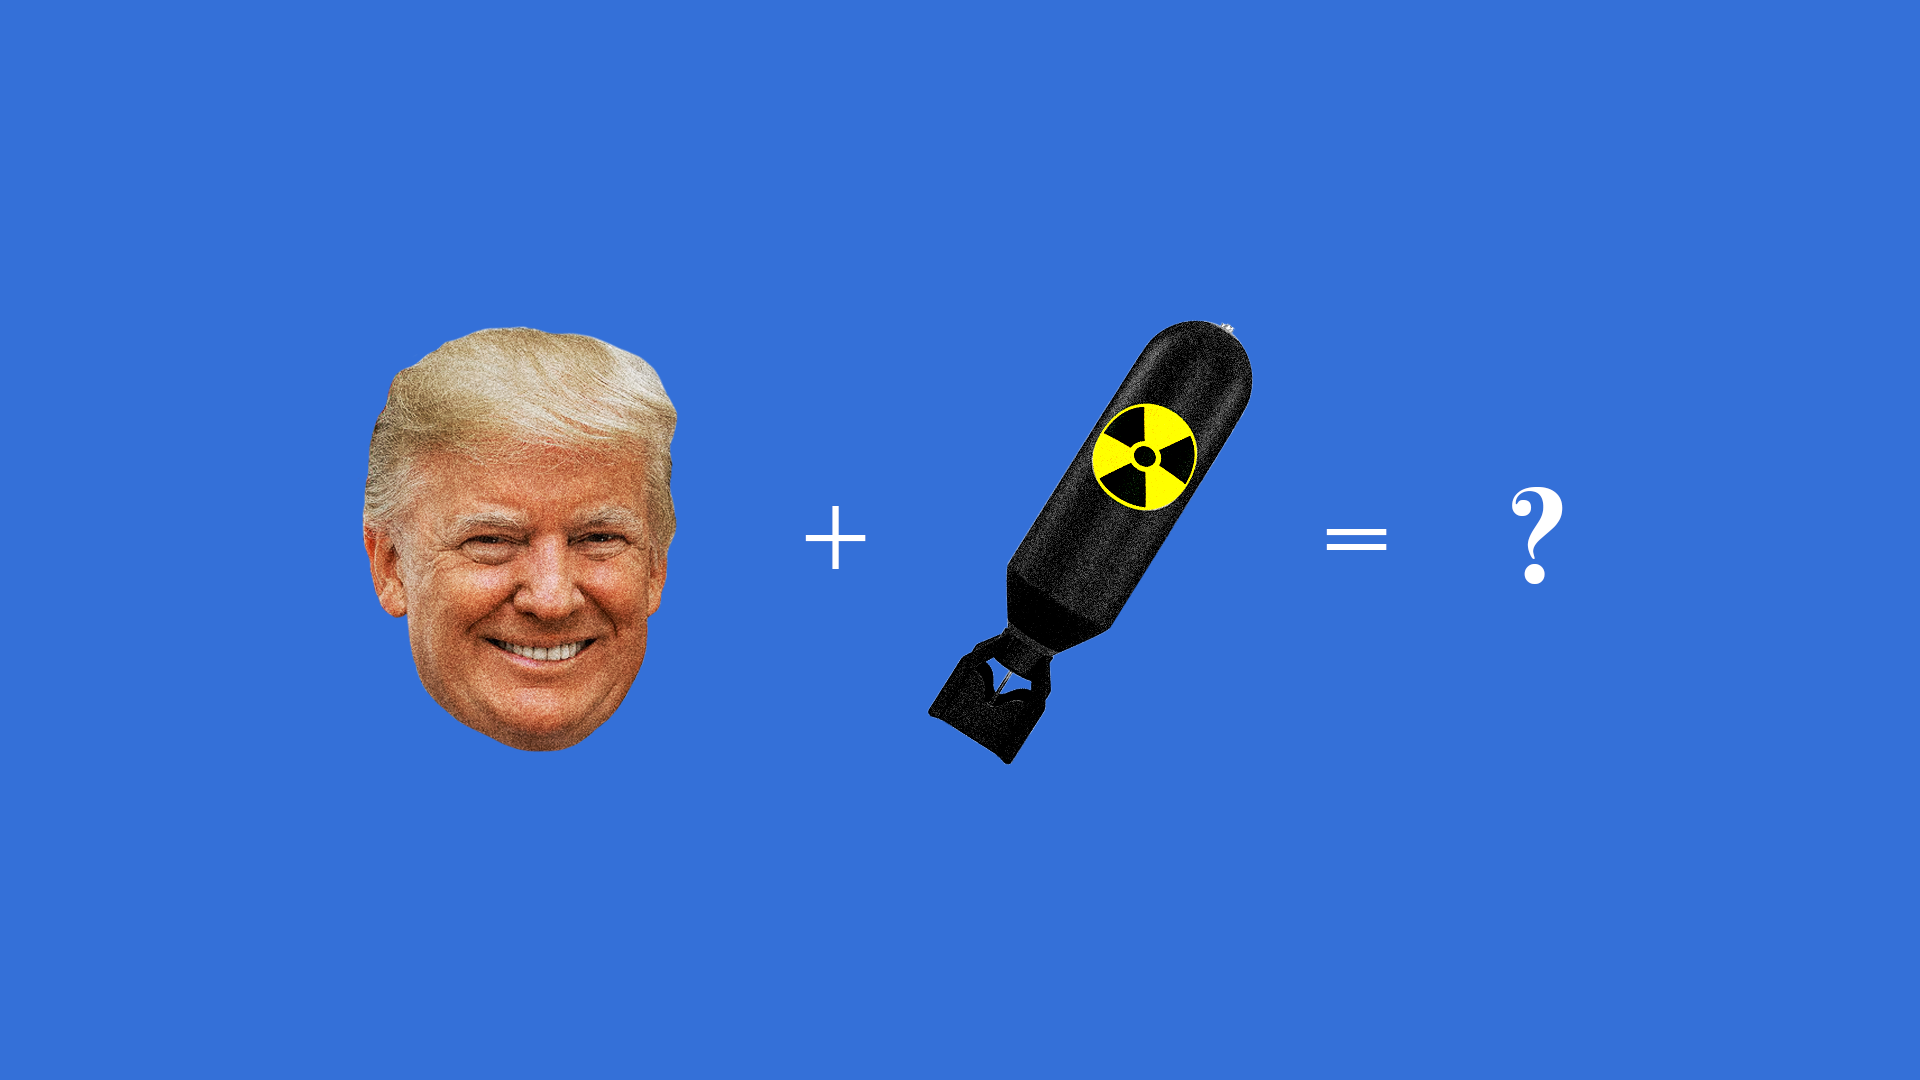 Trump + nuclear missile equation